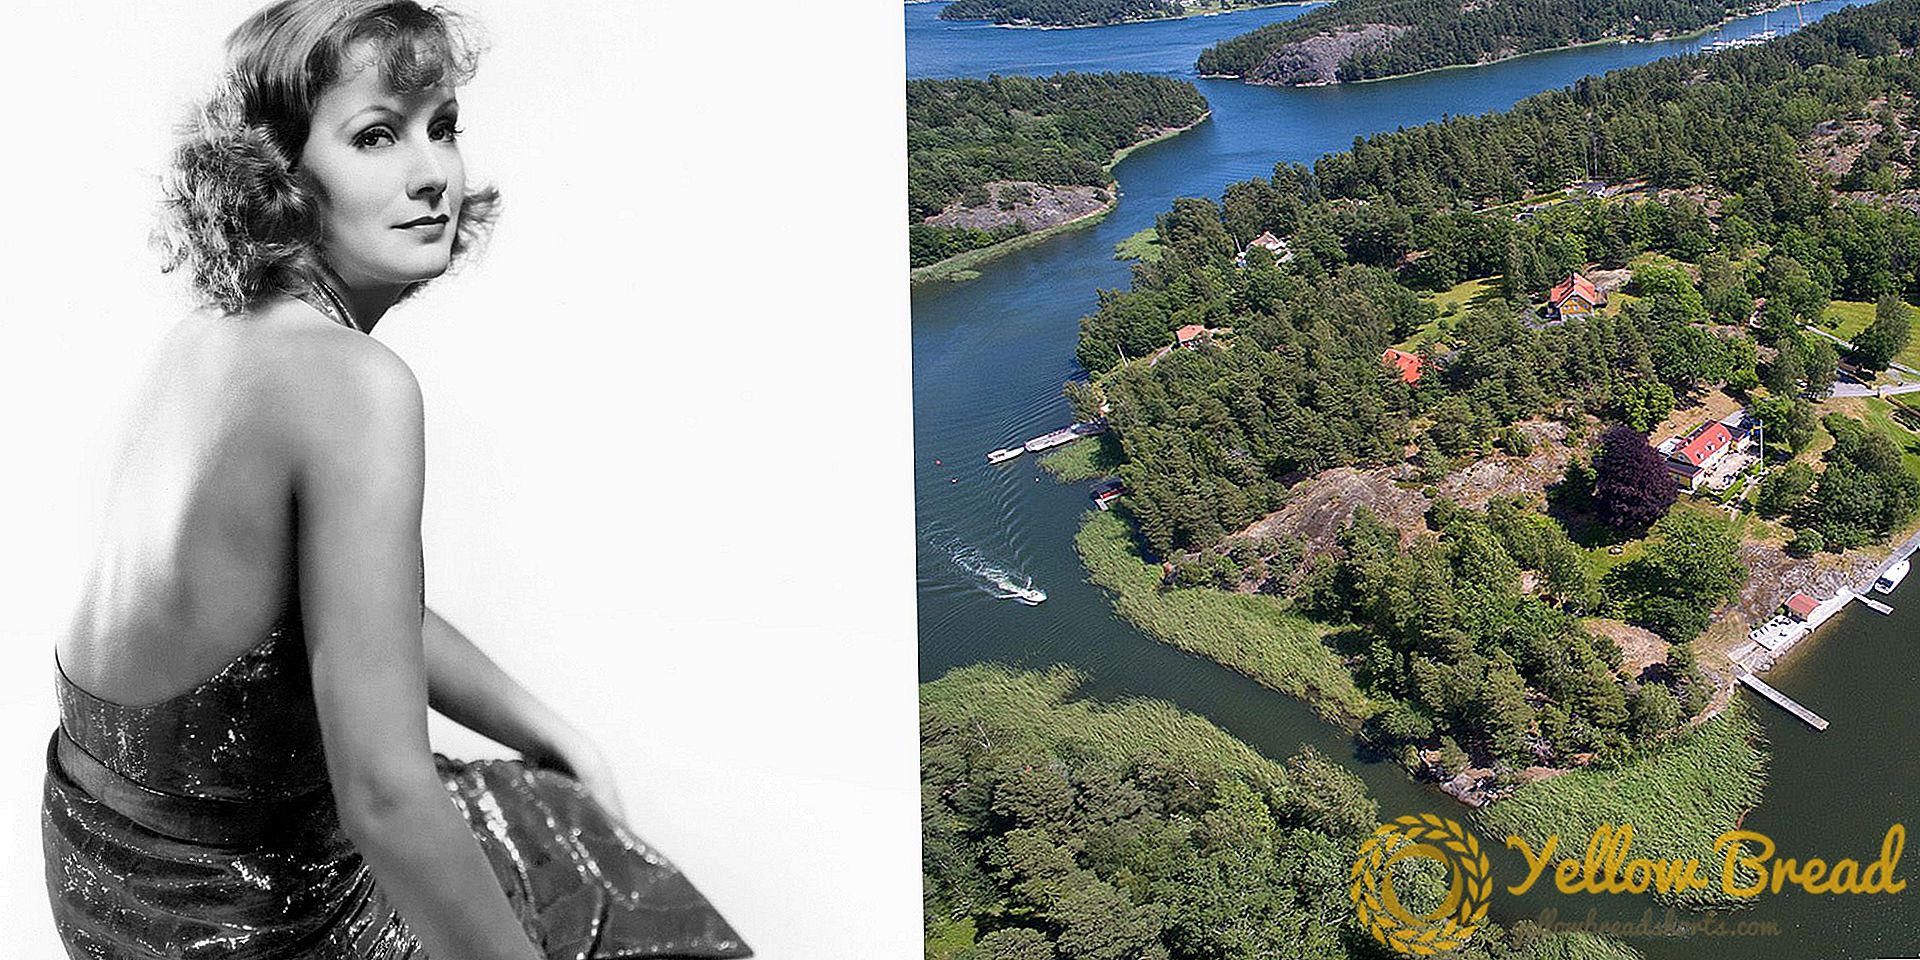 Greta Garbos Secret Island Retreat i Sverige er oppe til salgs